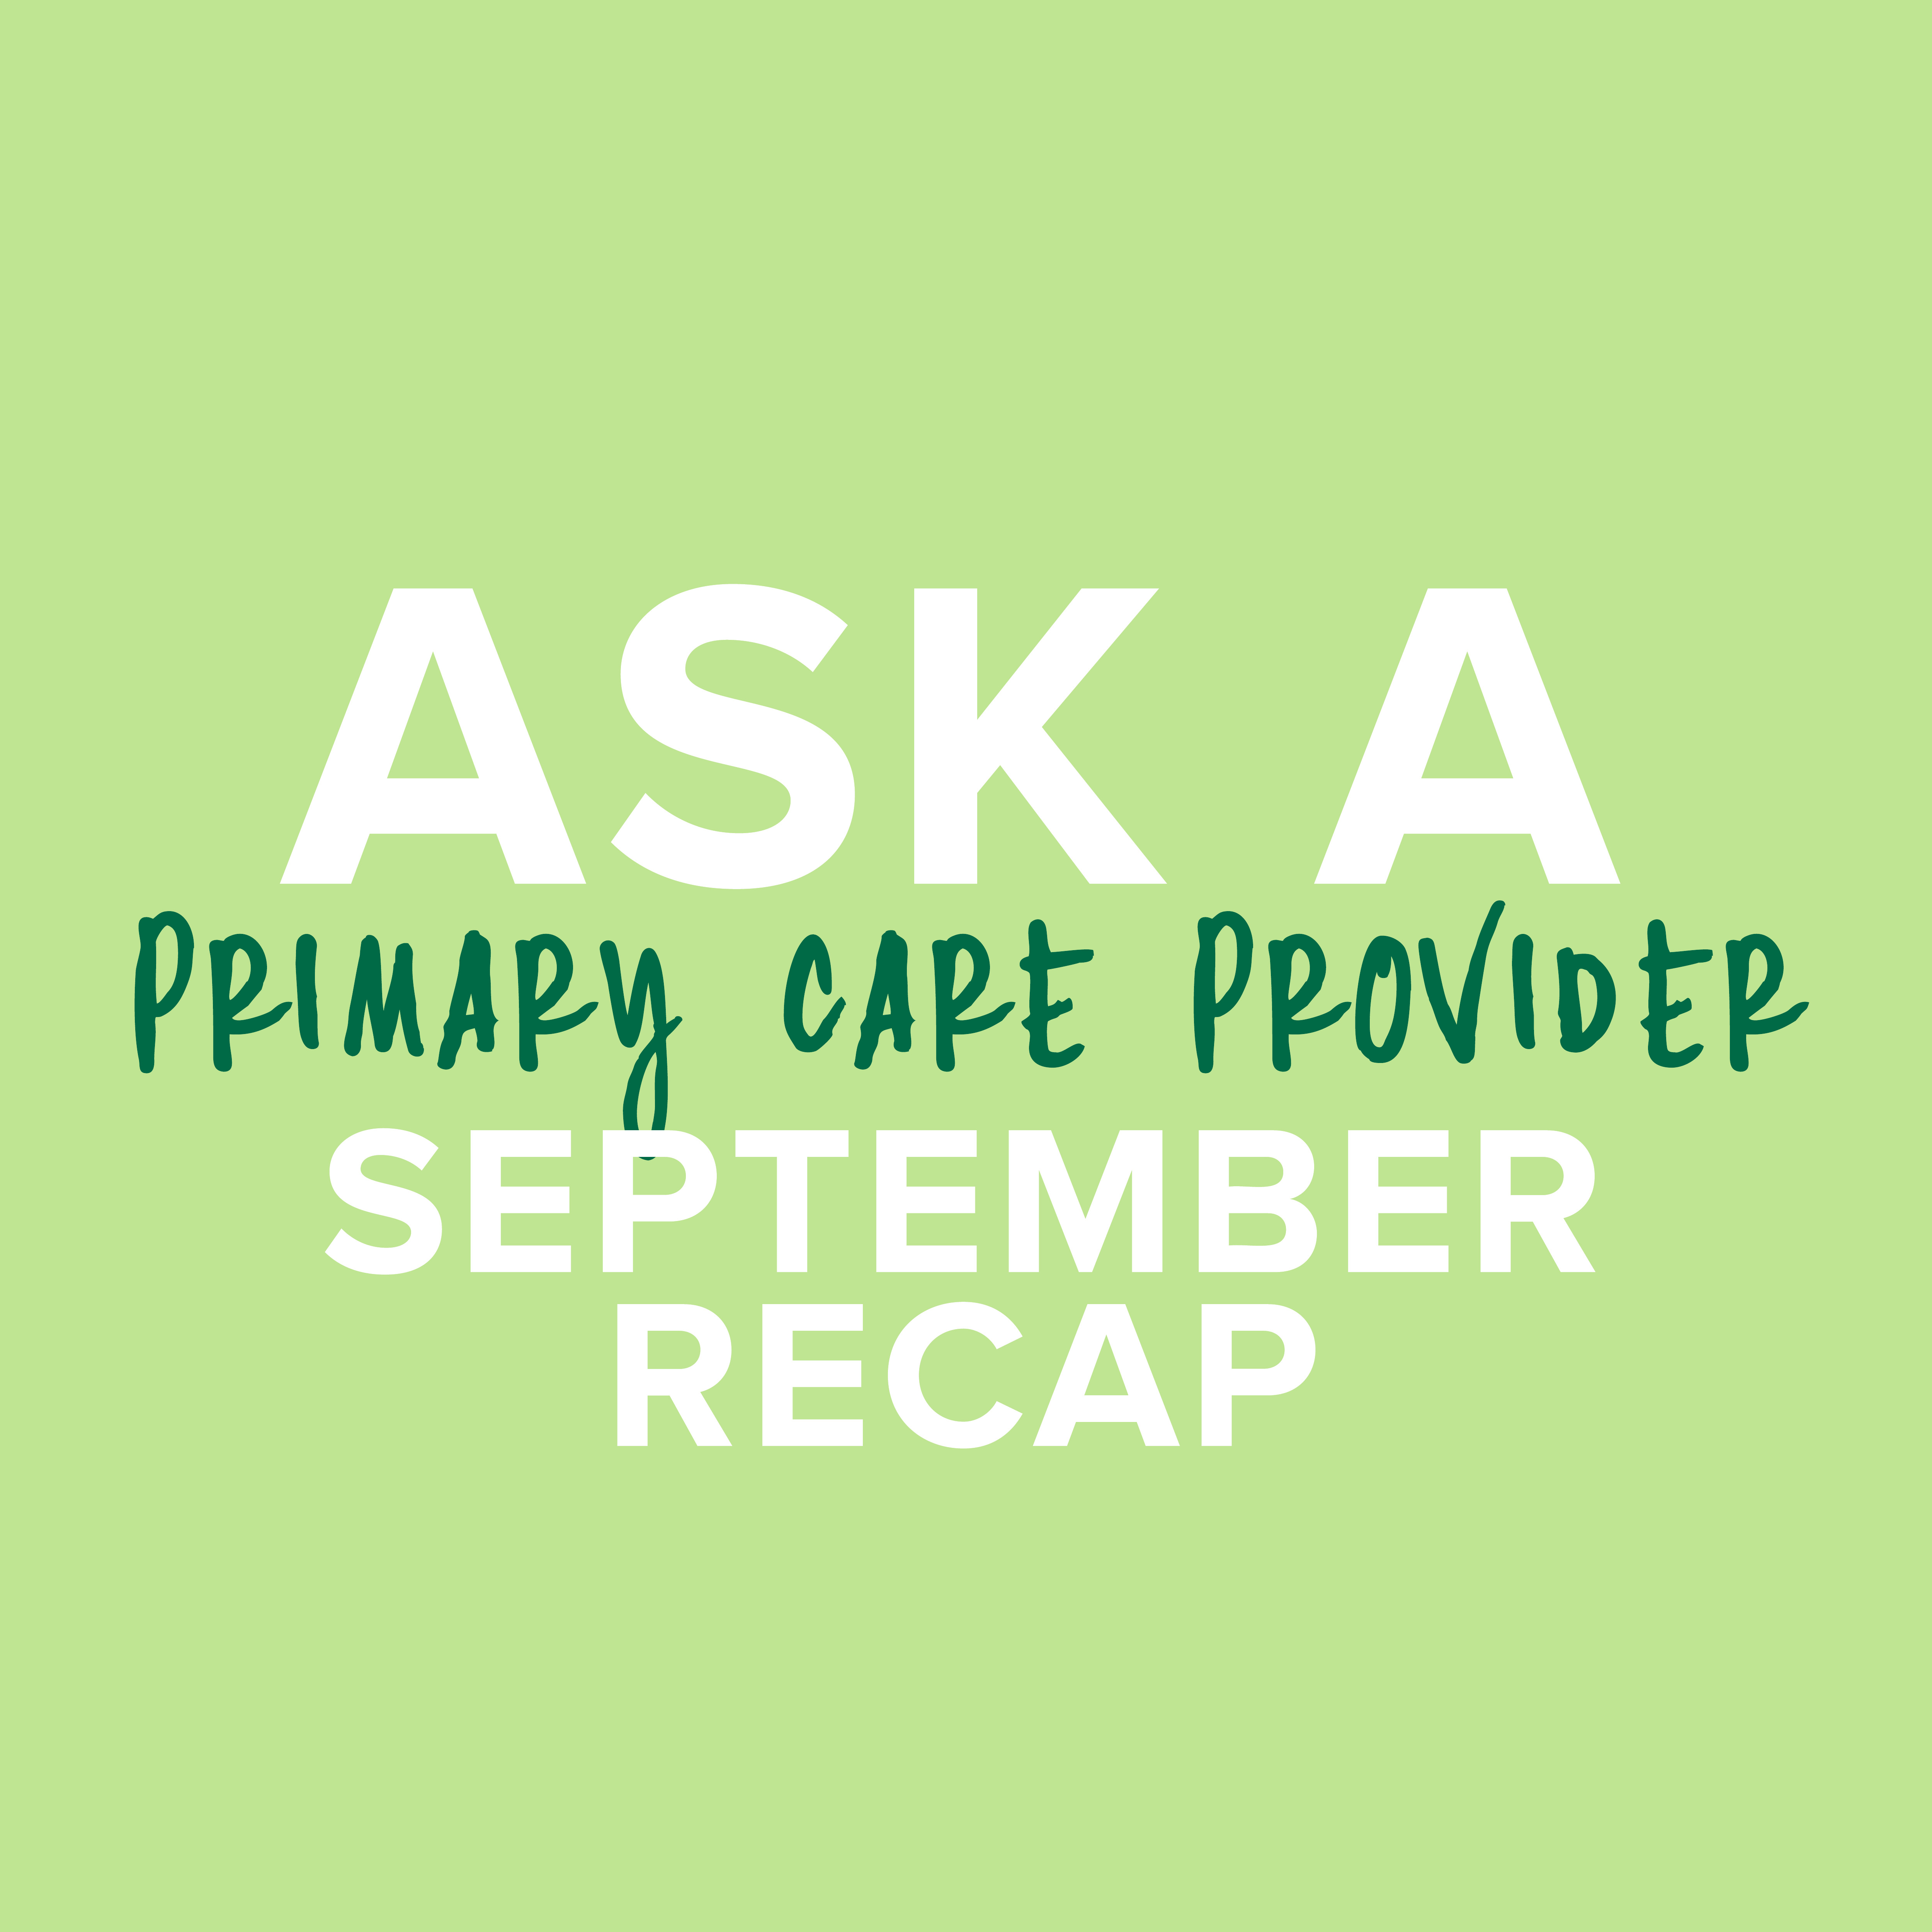 Ask a Provider September Recap